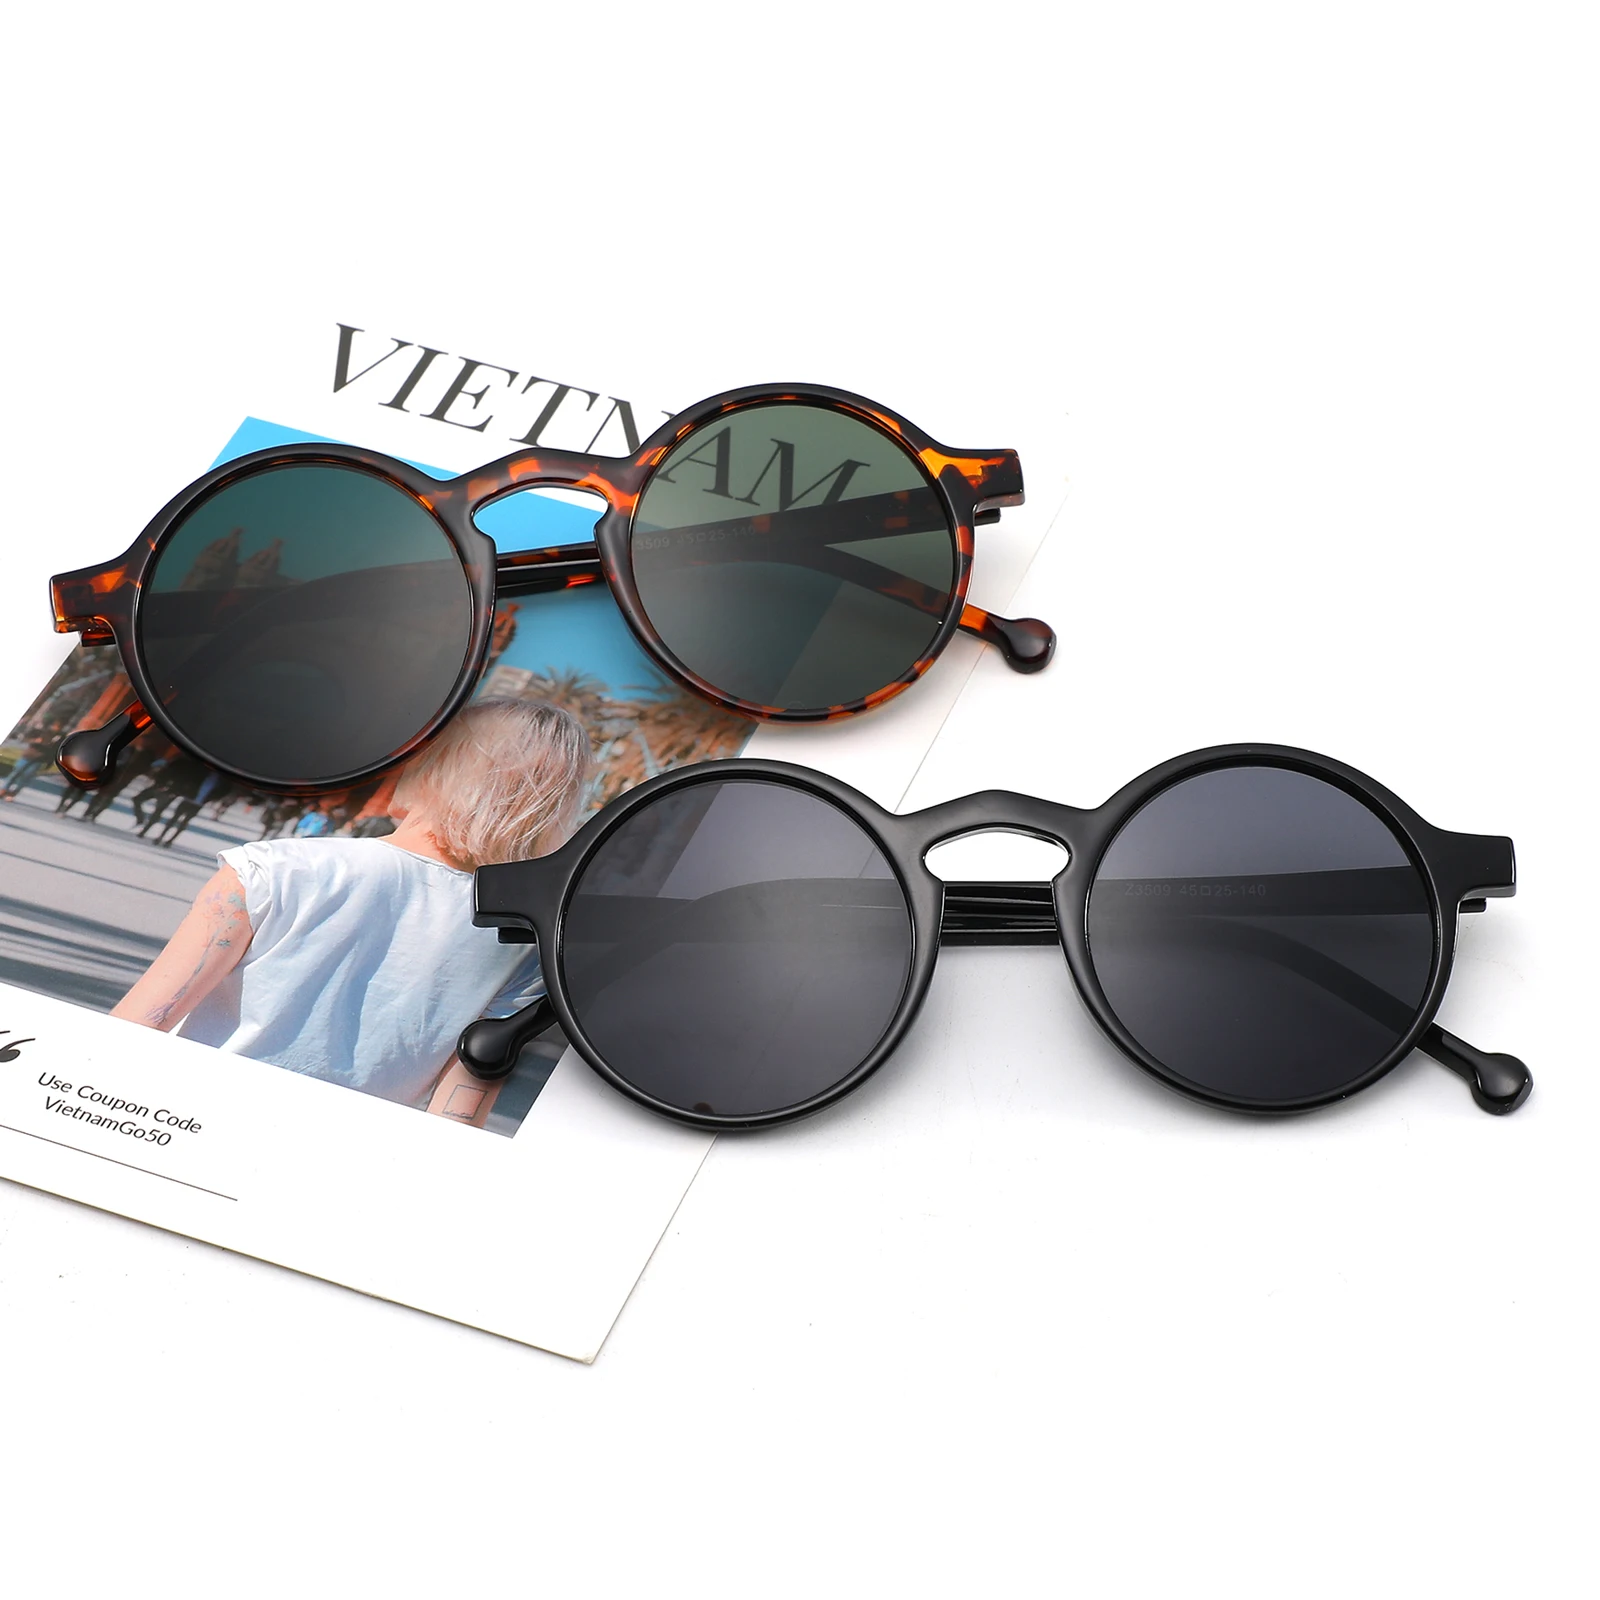 

CONCHEN oem china wholesale fashion trending style sun glasses round sunglasses uv400 sunglasses for women & men